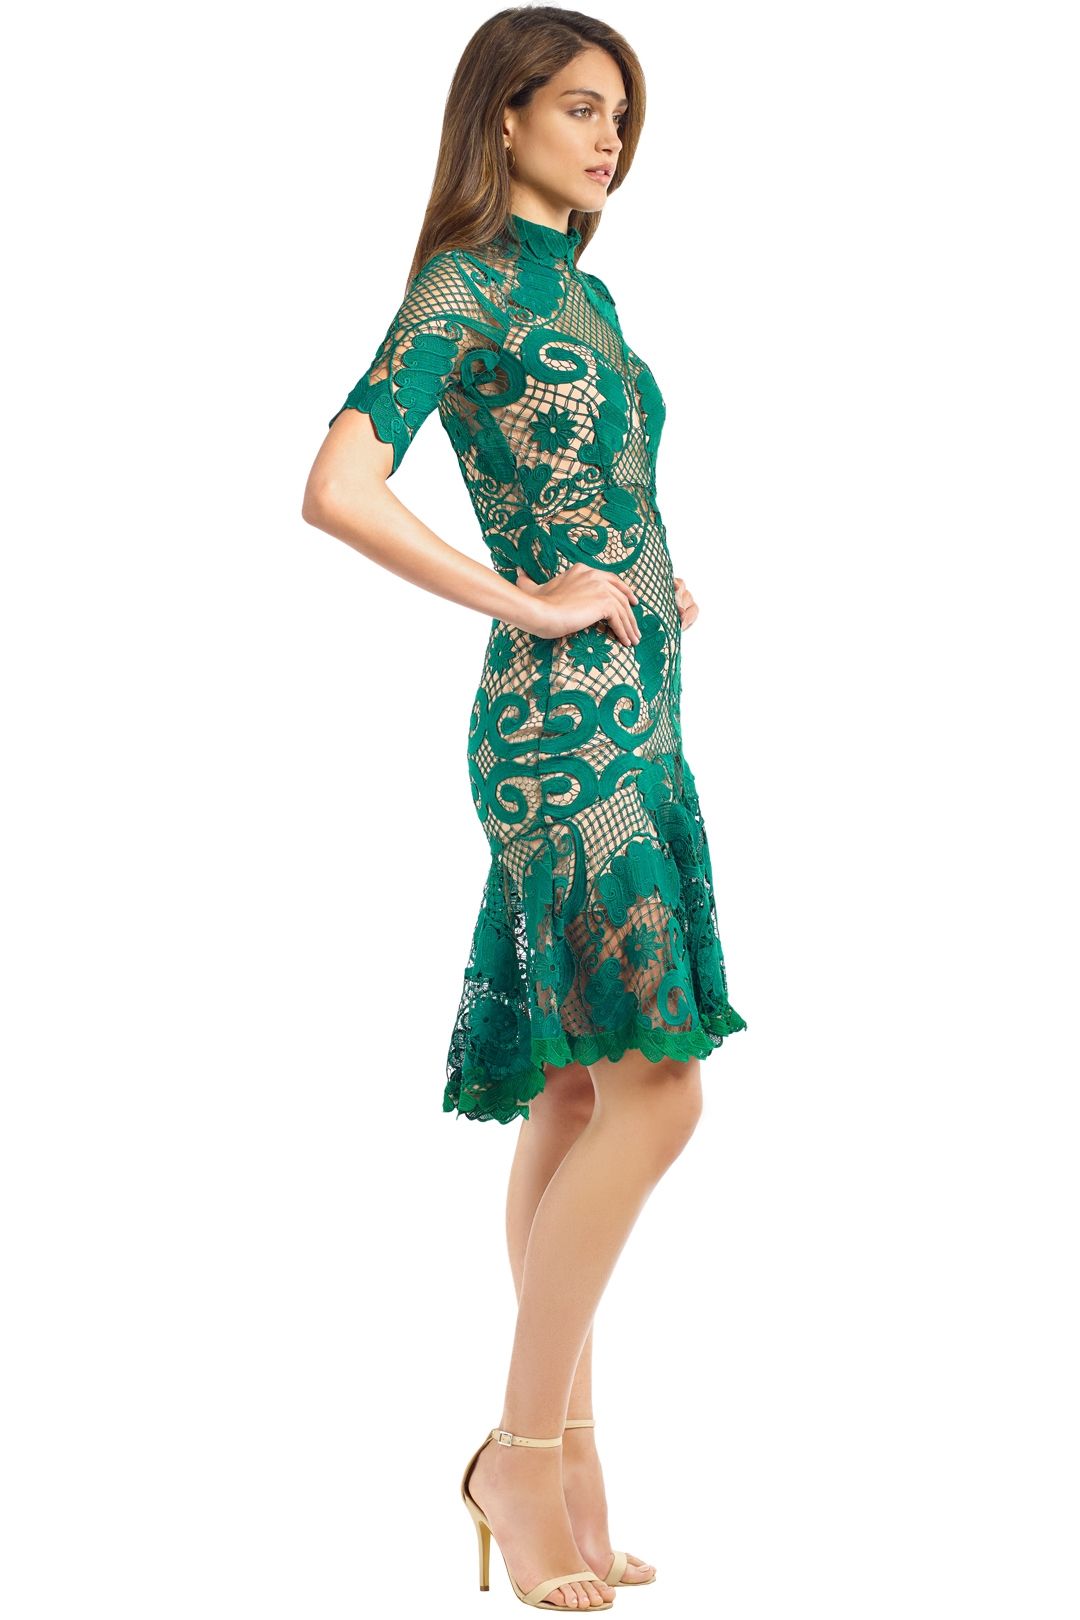 Thurley - Babylon Lace Dress - Emerald - Side